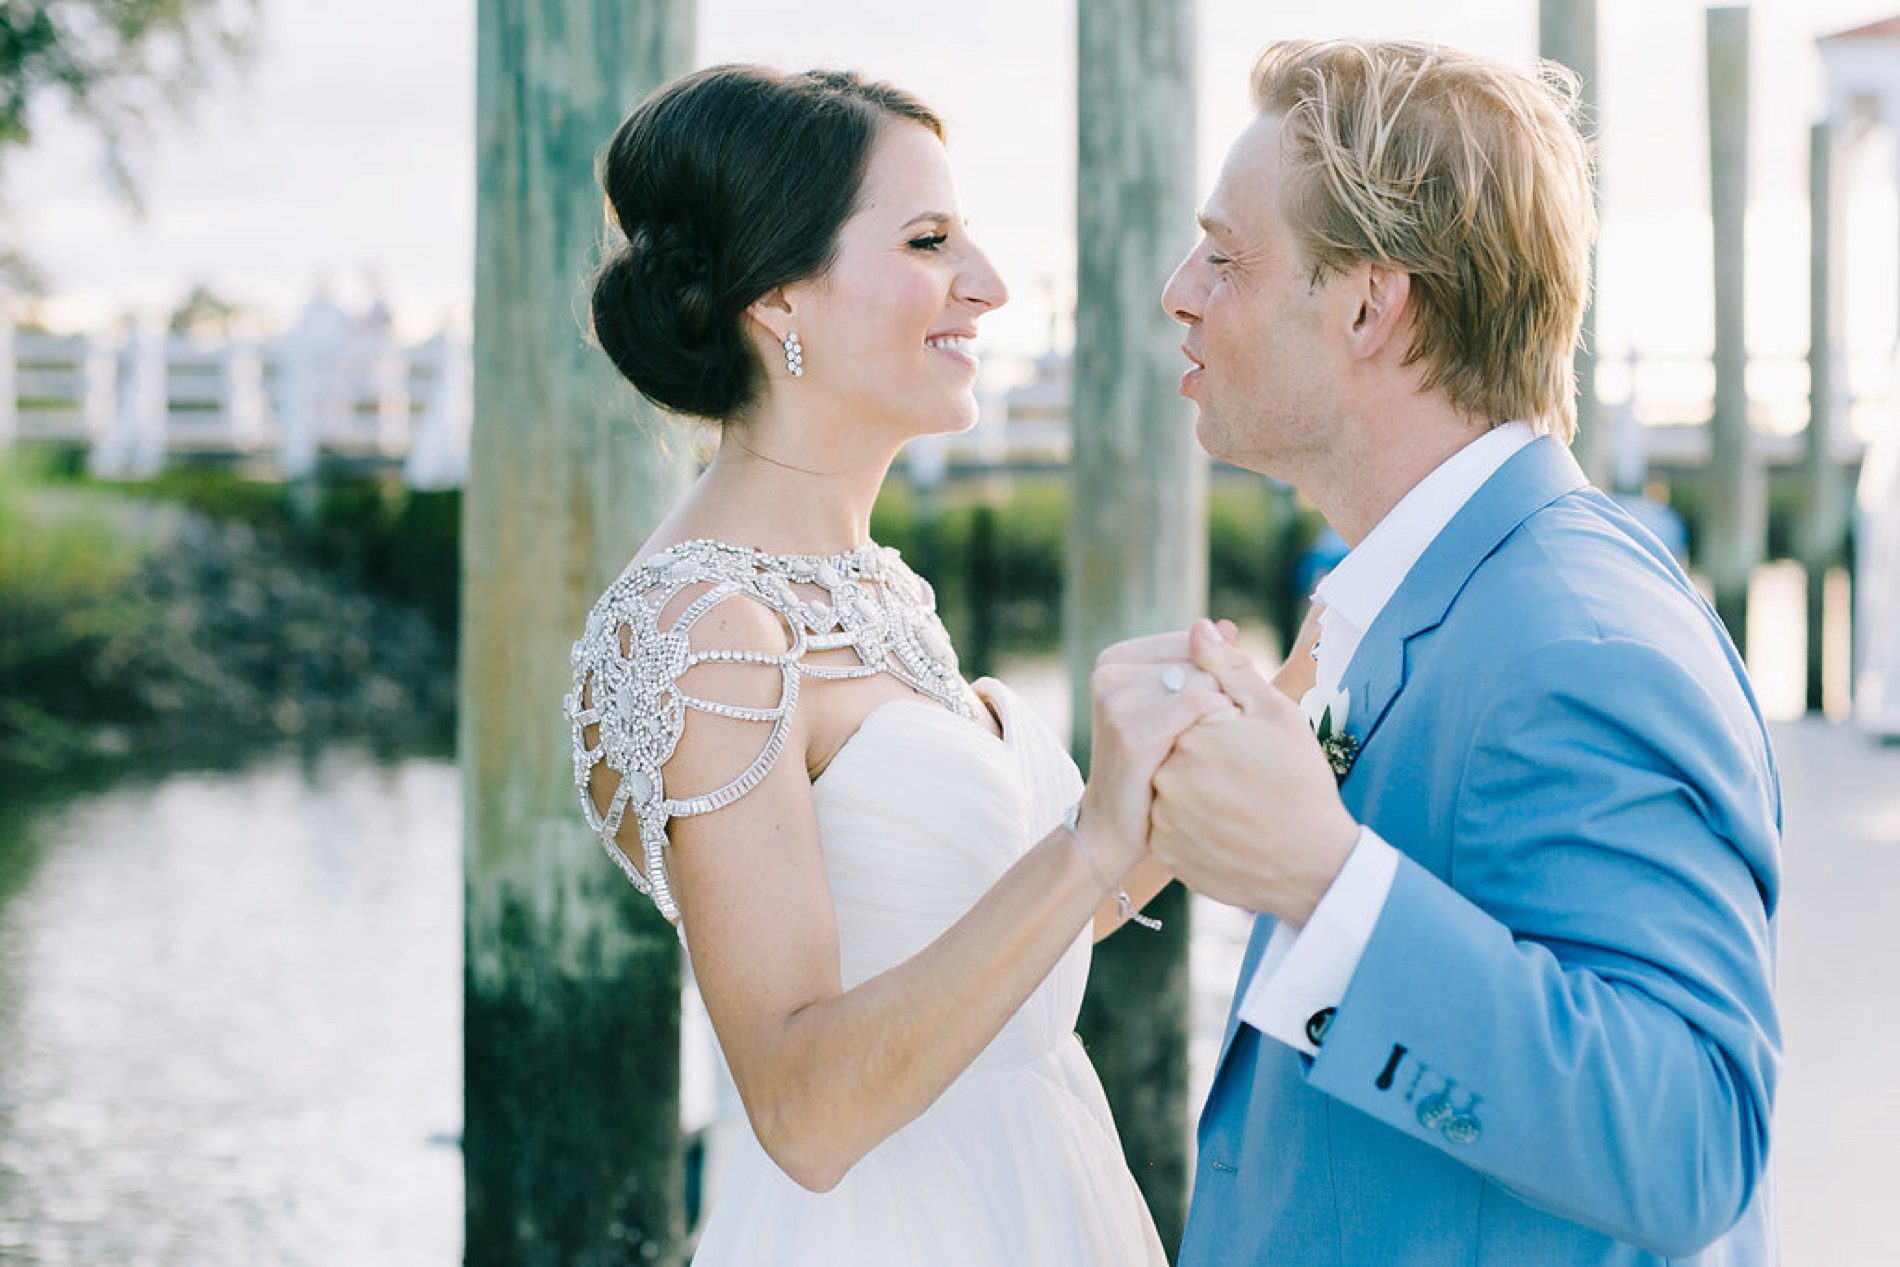 Destination Charleston Wedding With Coastal Theme by Catherine Ann Photography